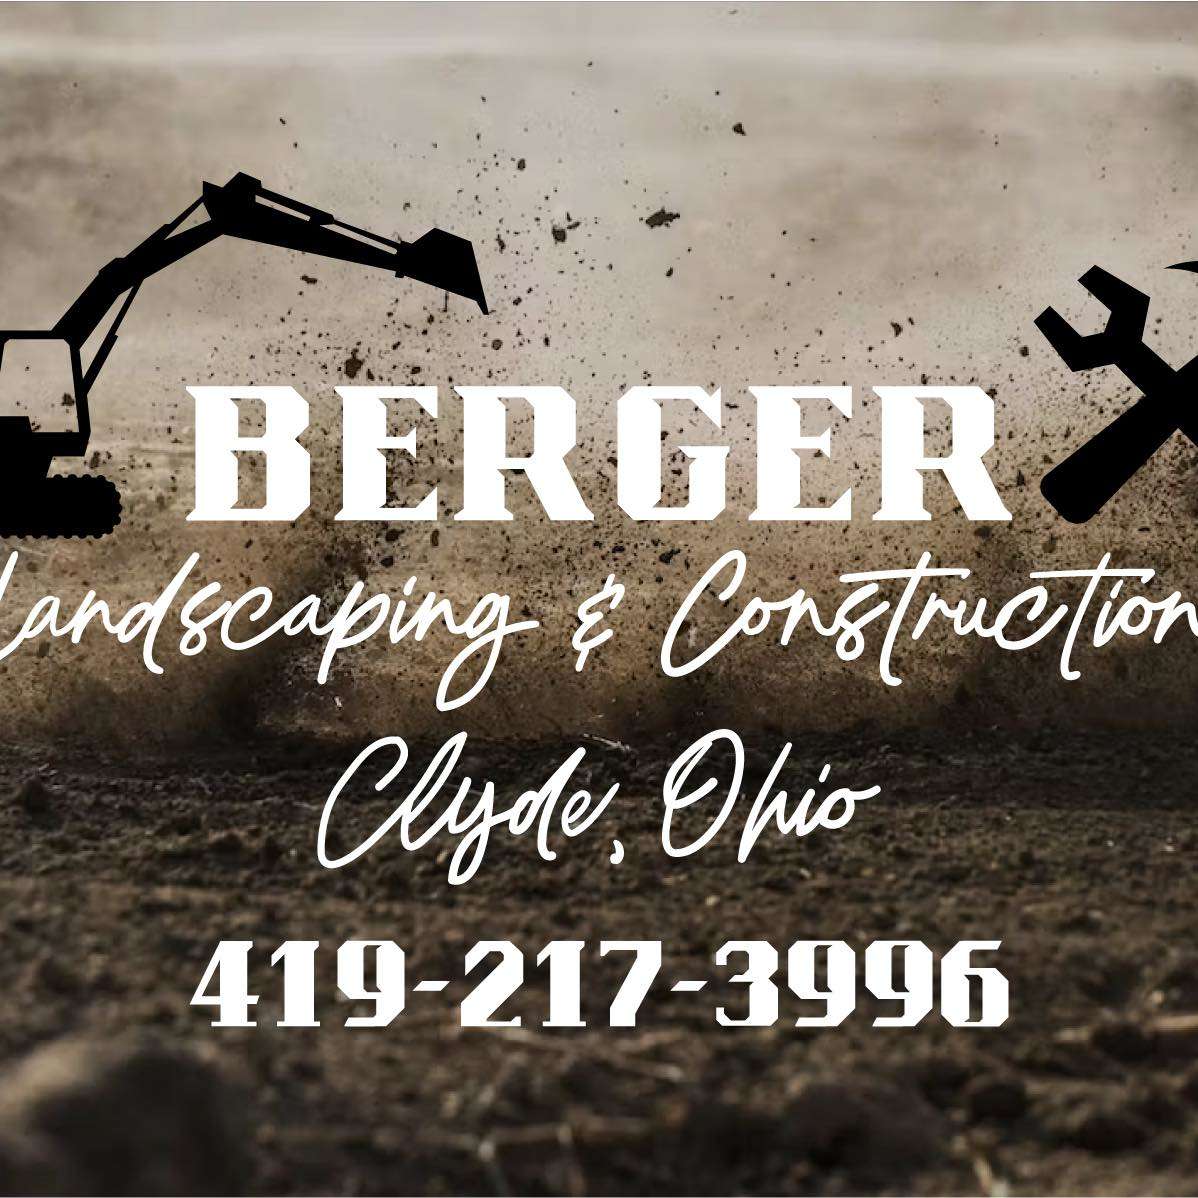 Berger Landscaping & Construction, LLC Logo